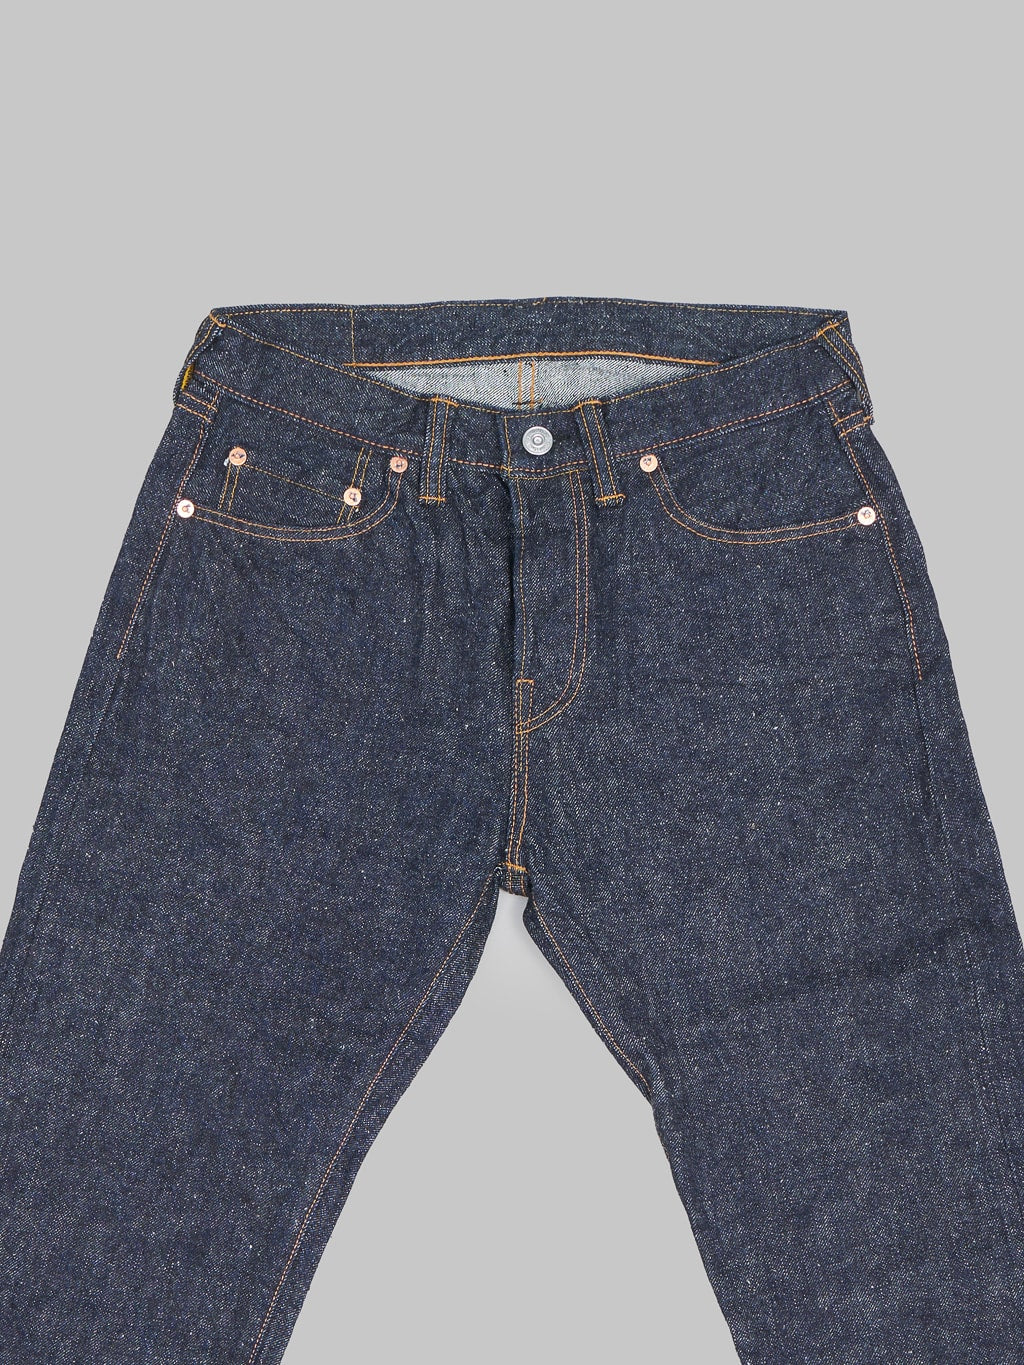 Samurai Jeans S0255XX Ushiwaka 15oz Slim Tapered jeans waist